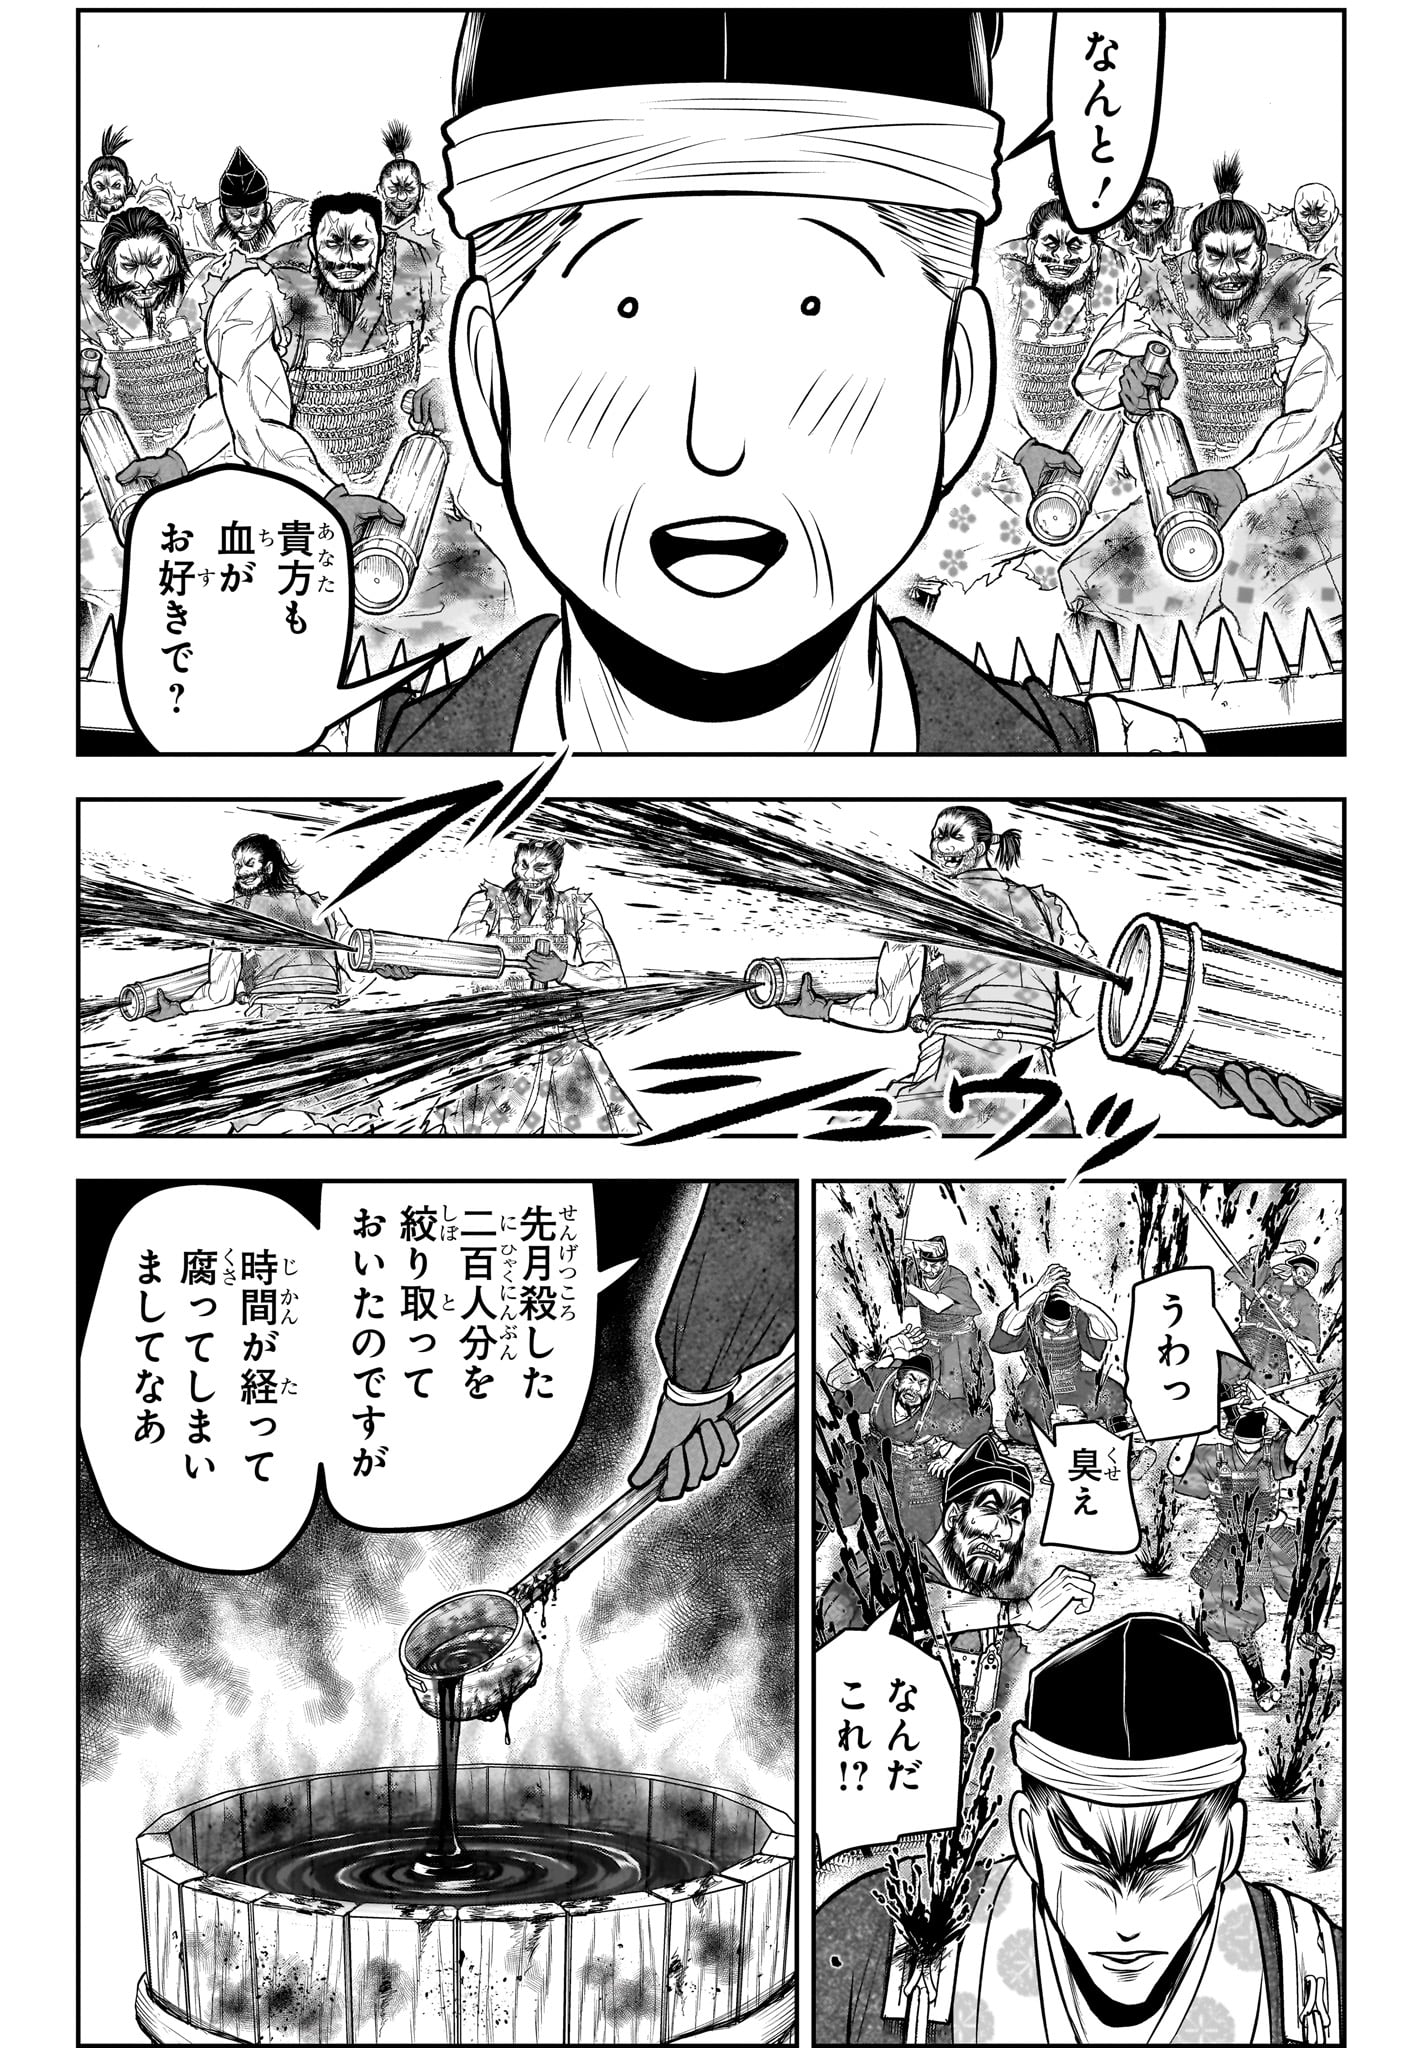 Nige Jouzu no Wakagimi - Chapter 158 - Page 10